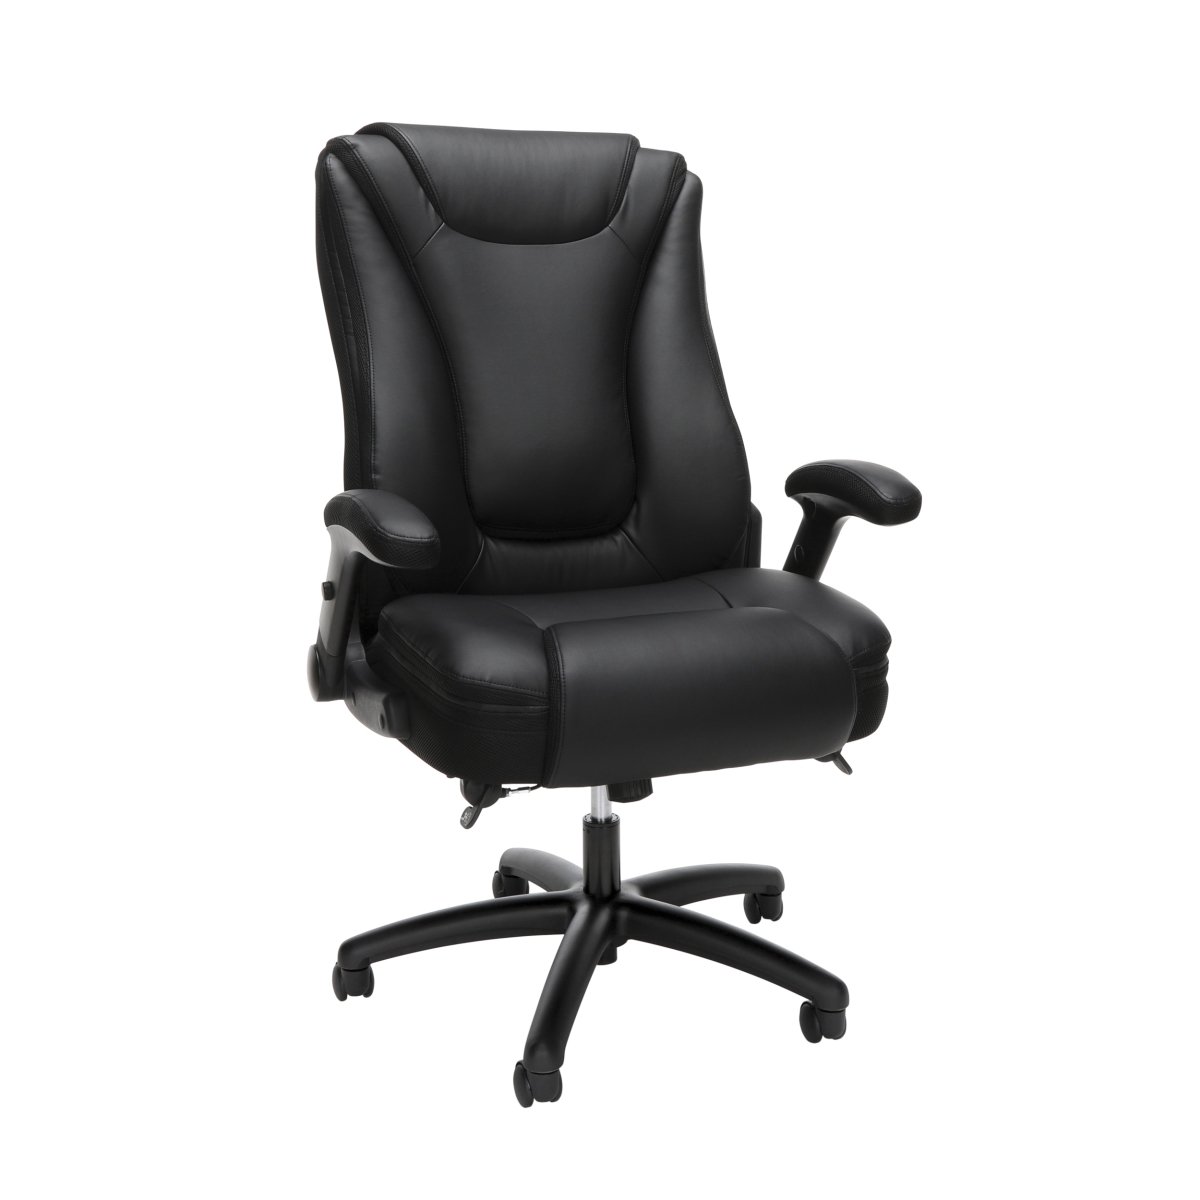 Ess-6047-blk Ergonomic Executive Bonded Leather Office Chair, Black